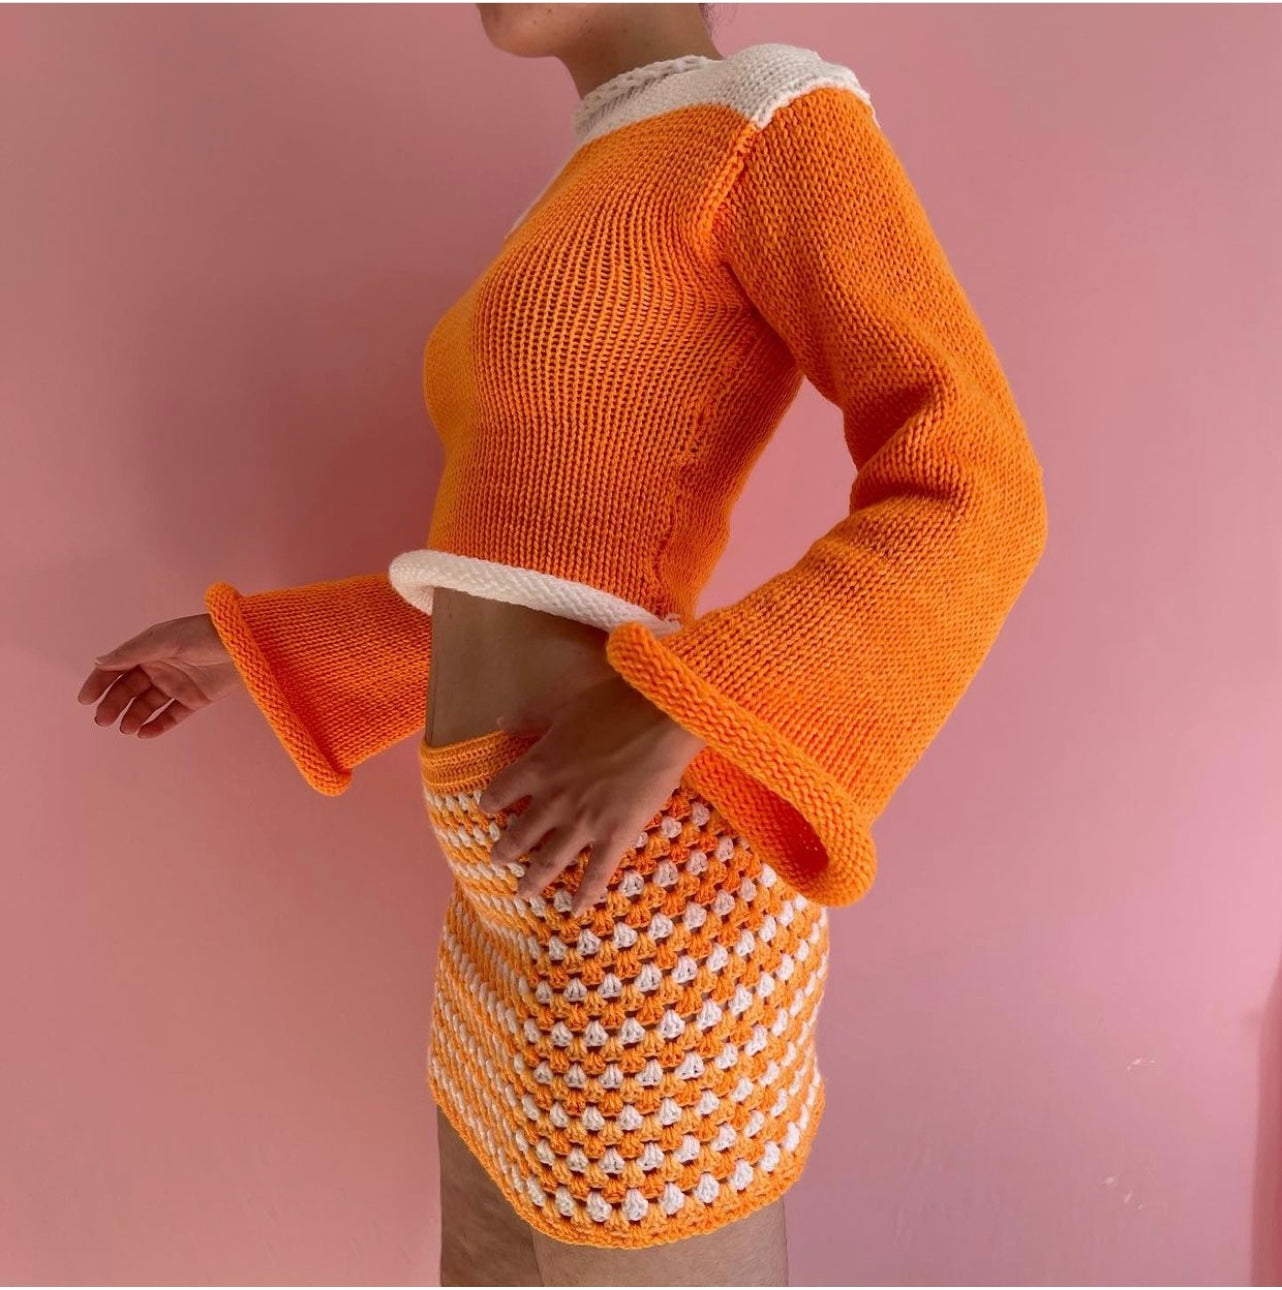 Handmade retro crochet mini skirt in orange and white